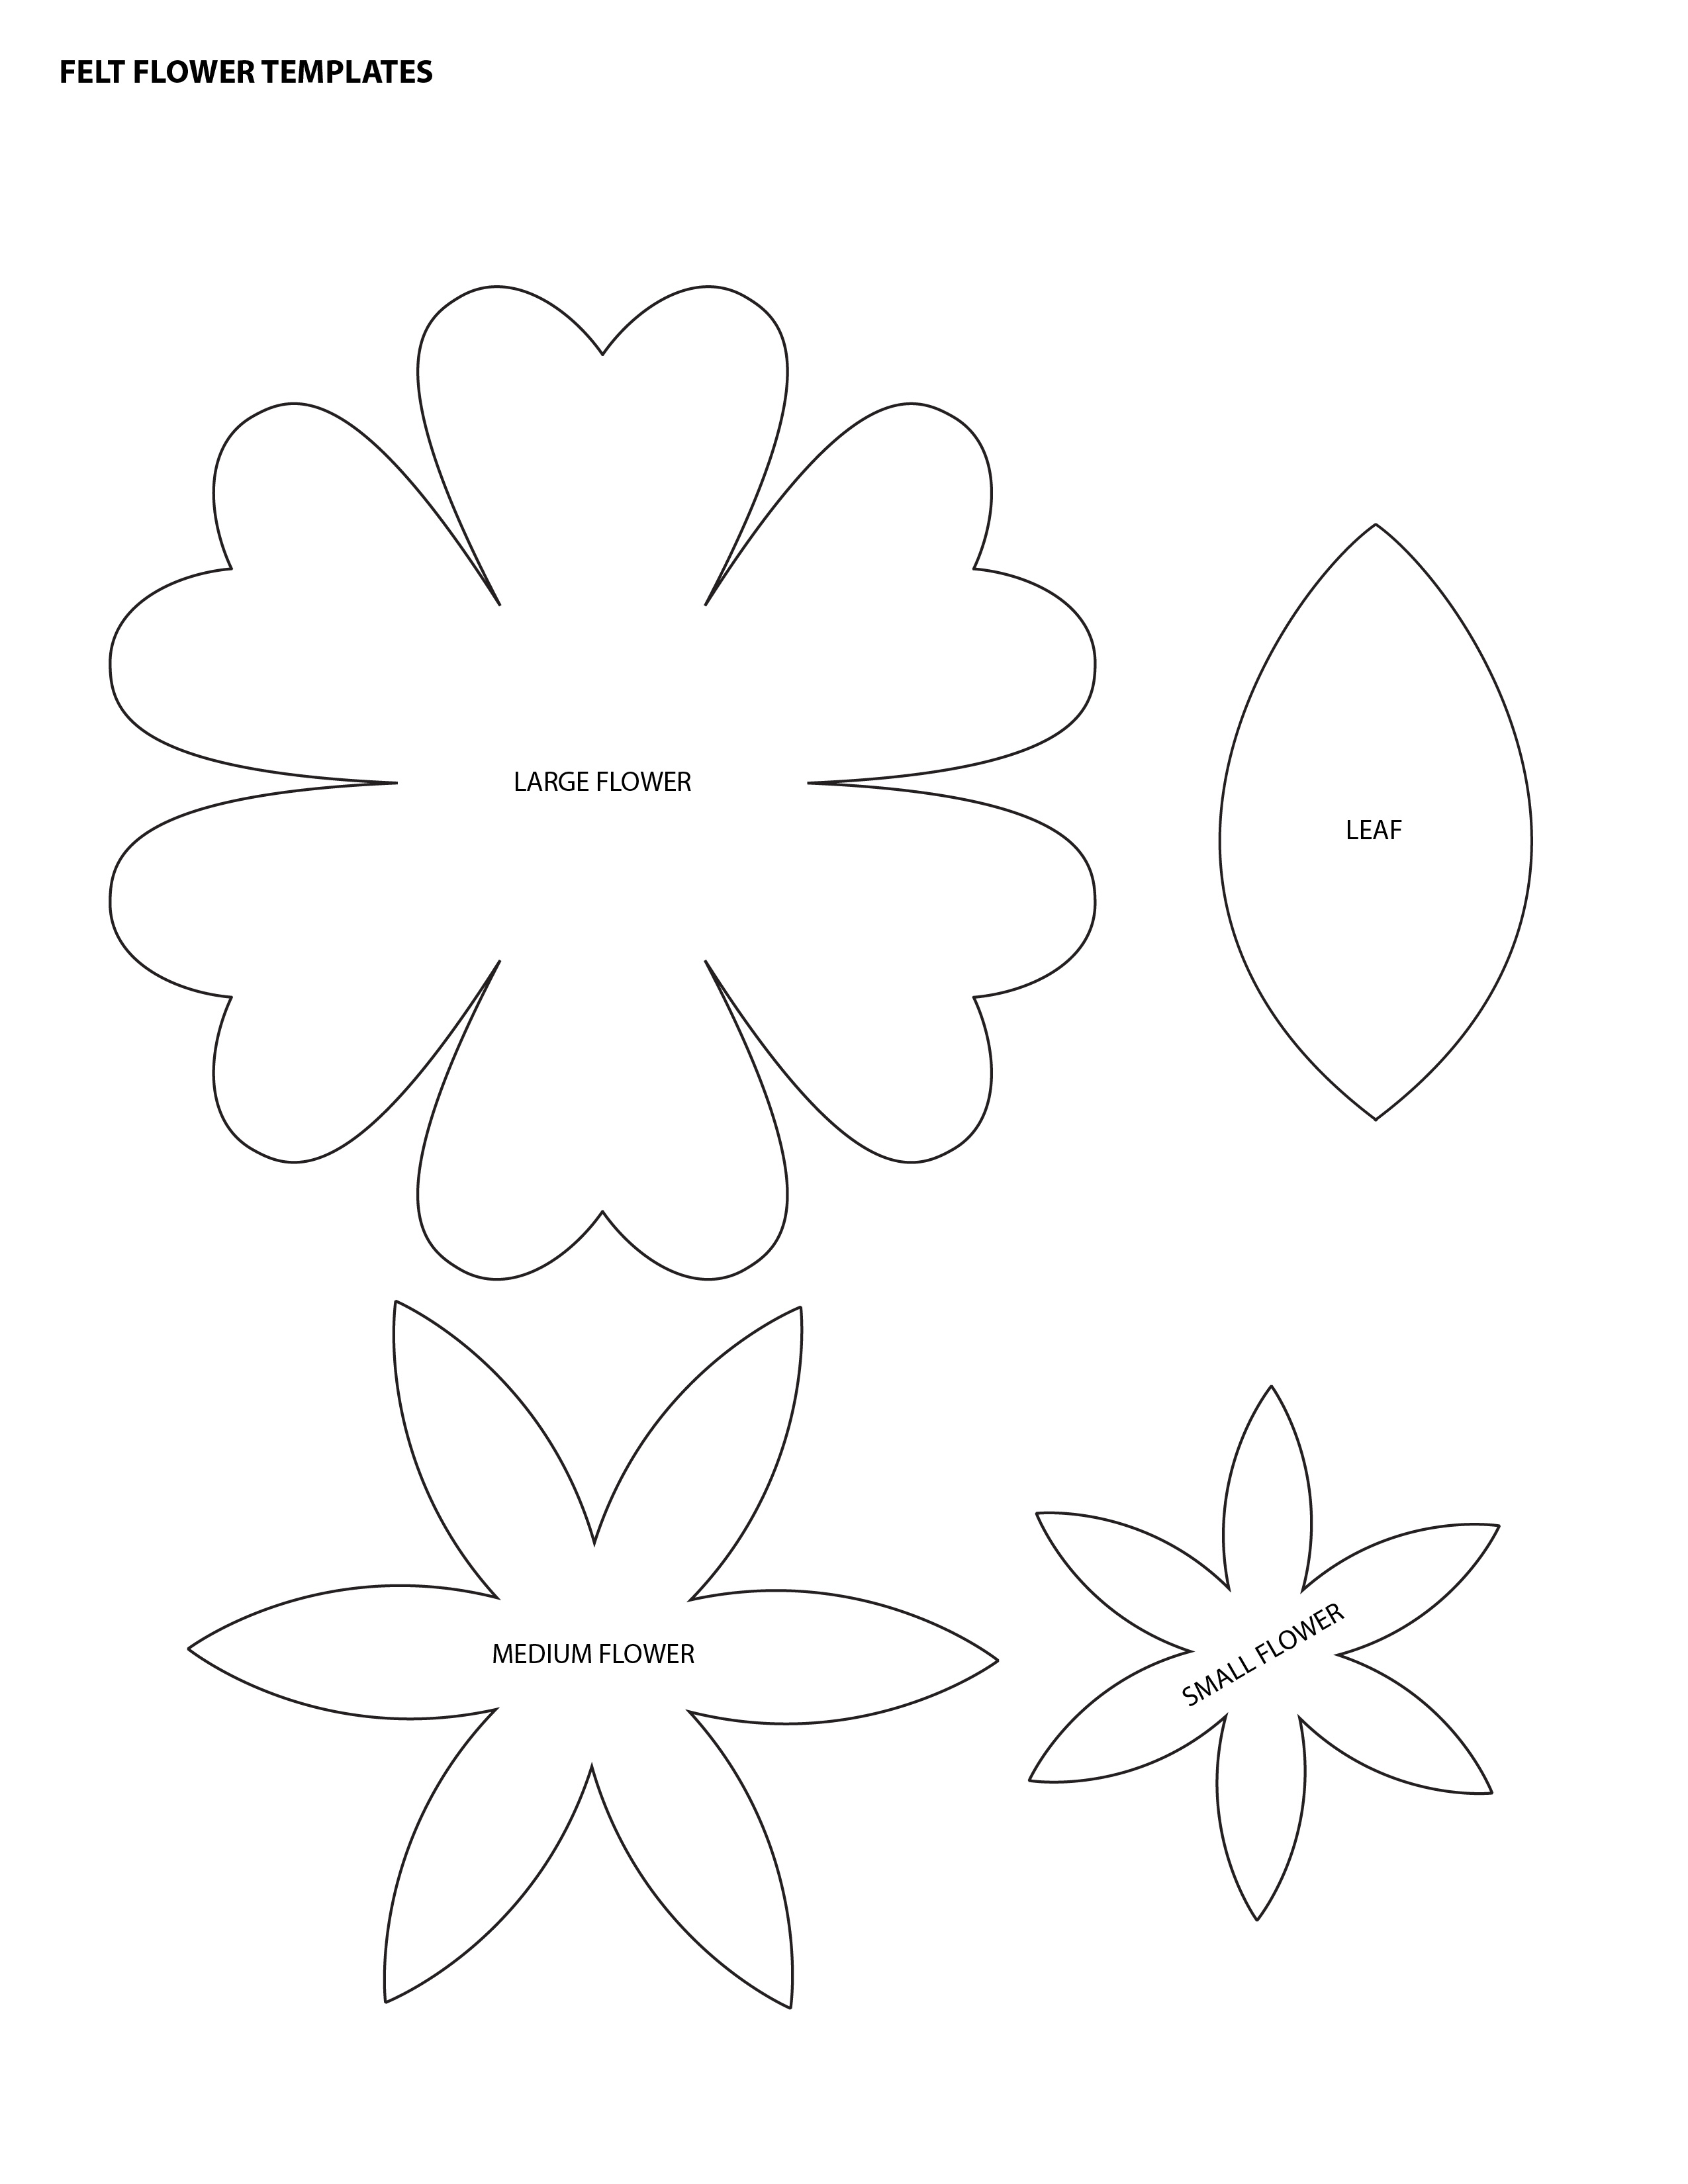 5-best-images-of-felt-flower-patterns-printable-free-printable-felt